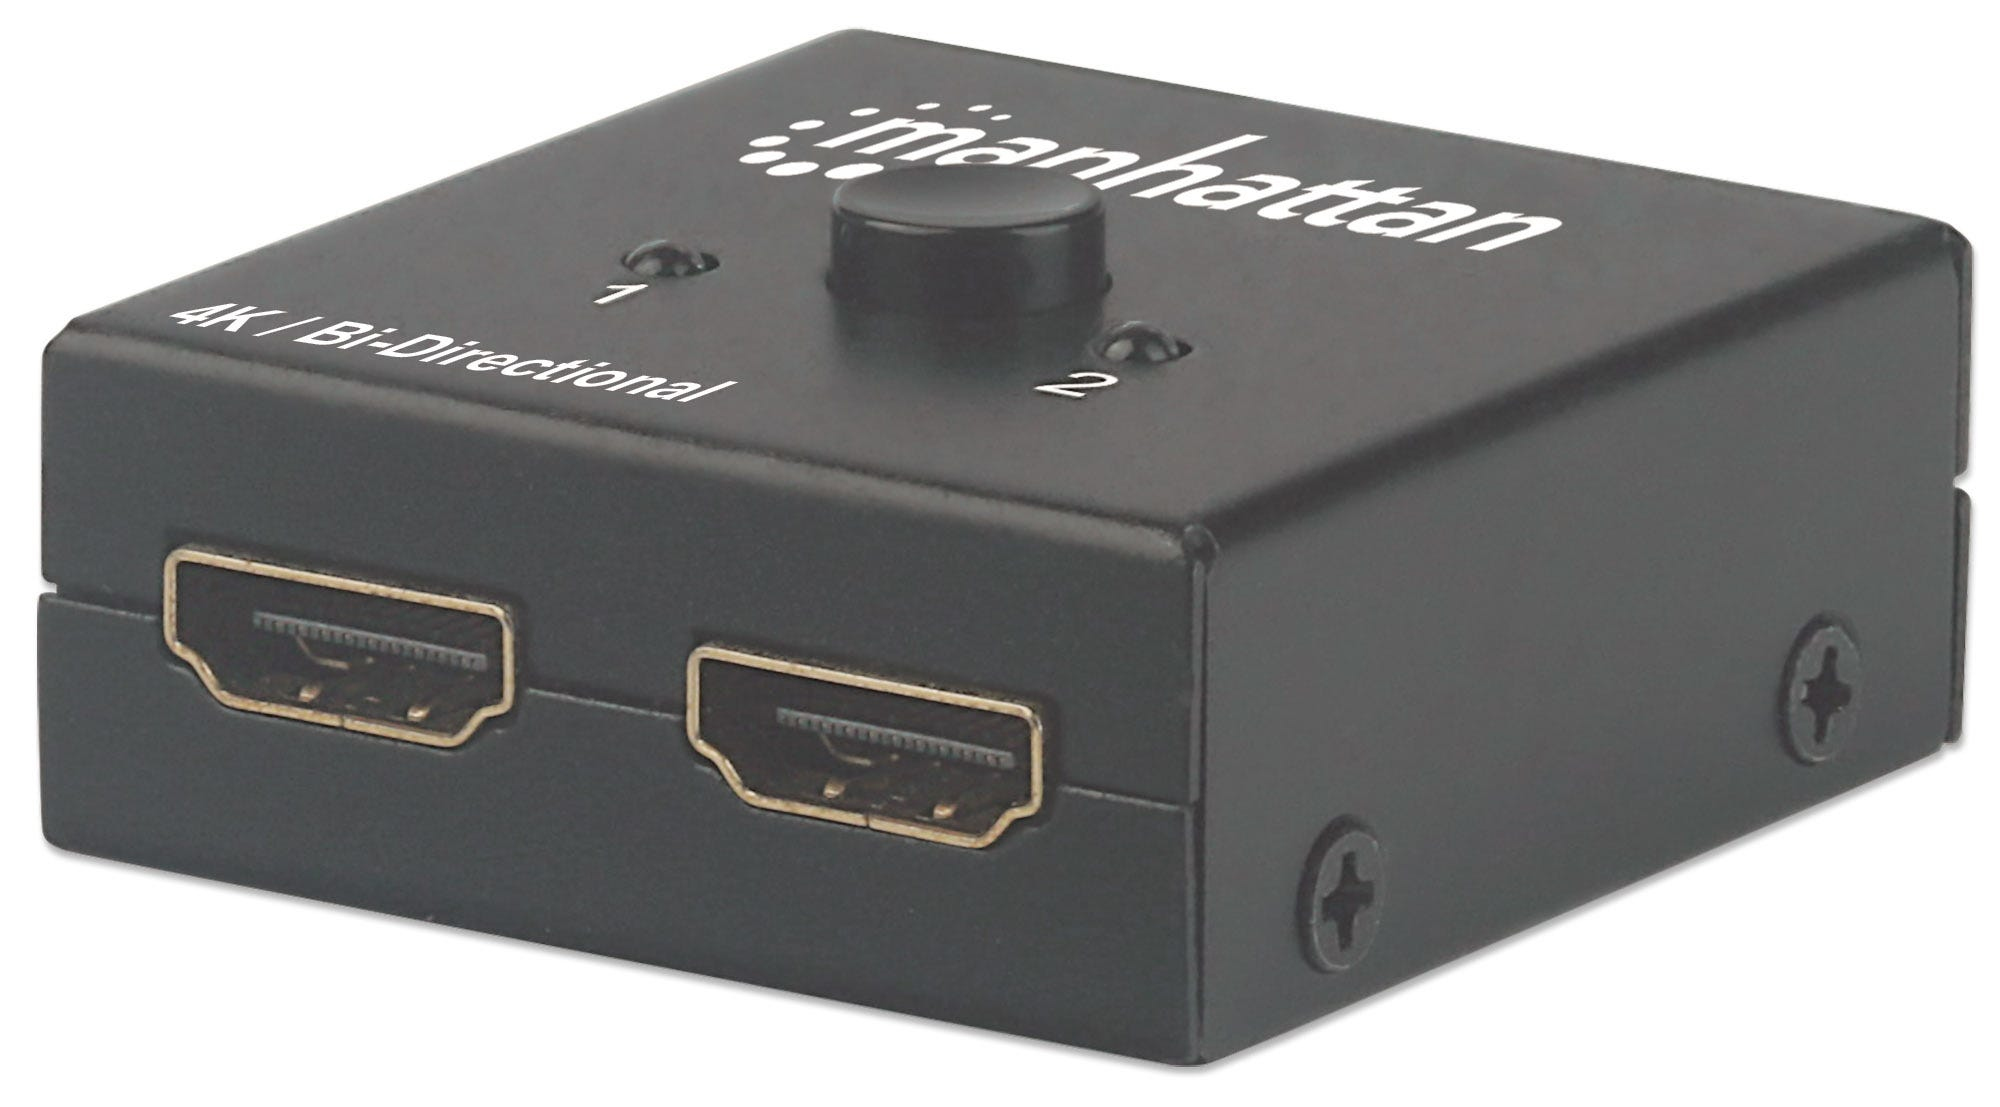 Manhattan HDMI Switch 2-Port, 4K@30Hz, Bi-Directional, Black, Displays output from x1 HDMI source to x2 HD displays (same output to both displays)